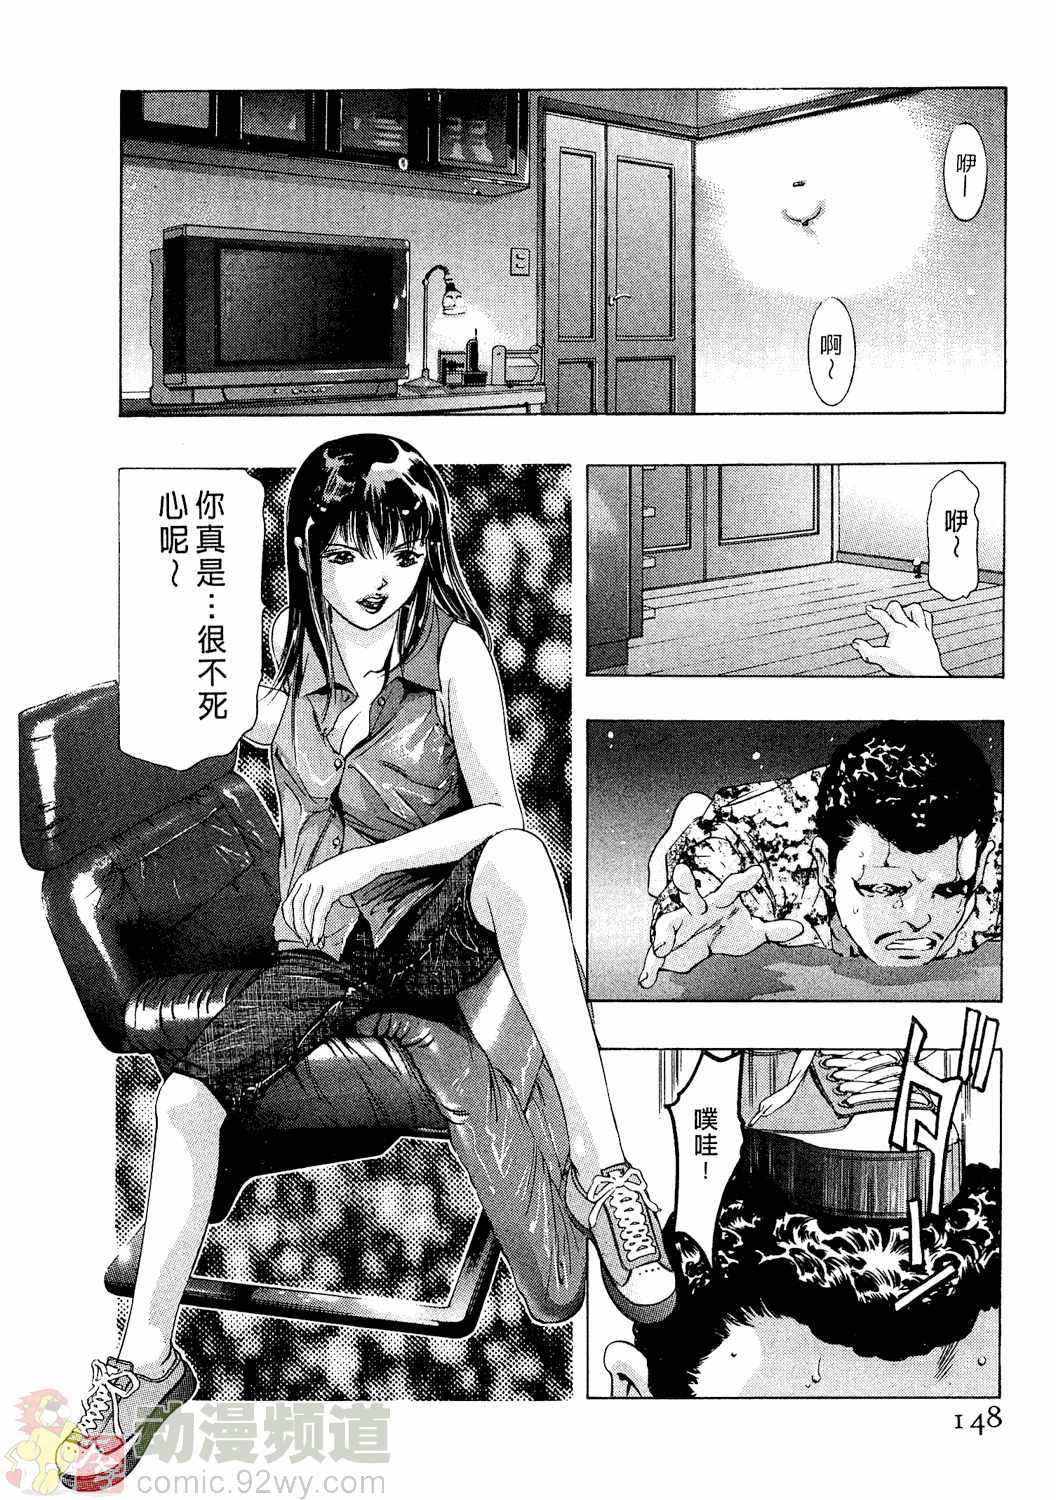 [Hirohisa Onikubo] Female Panther 02 (Chinese) 